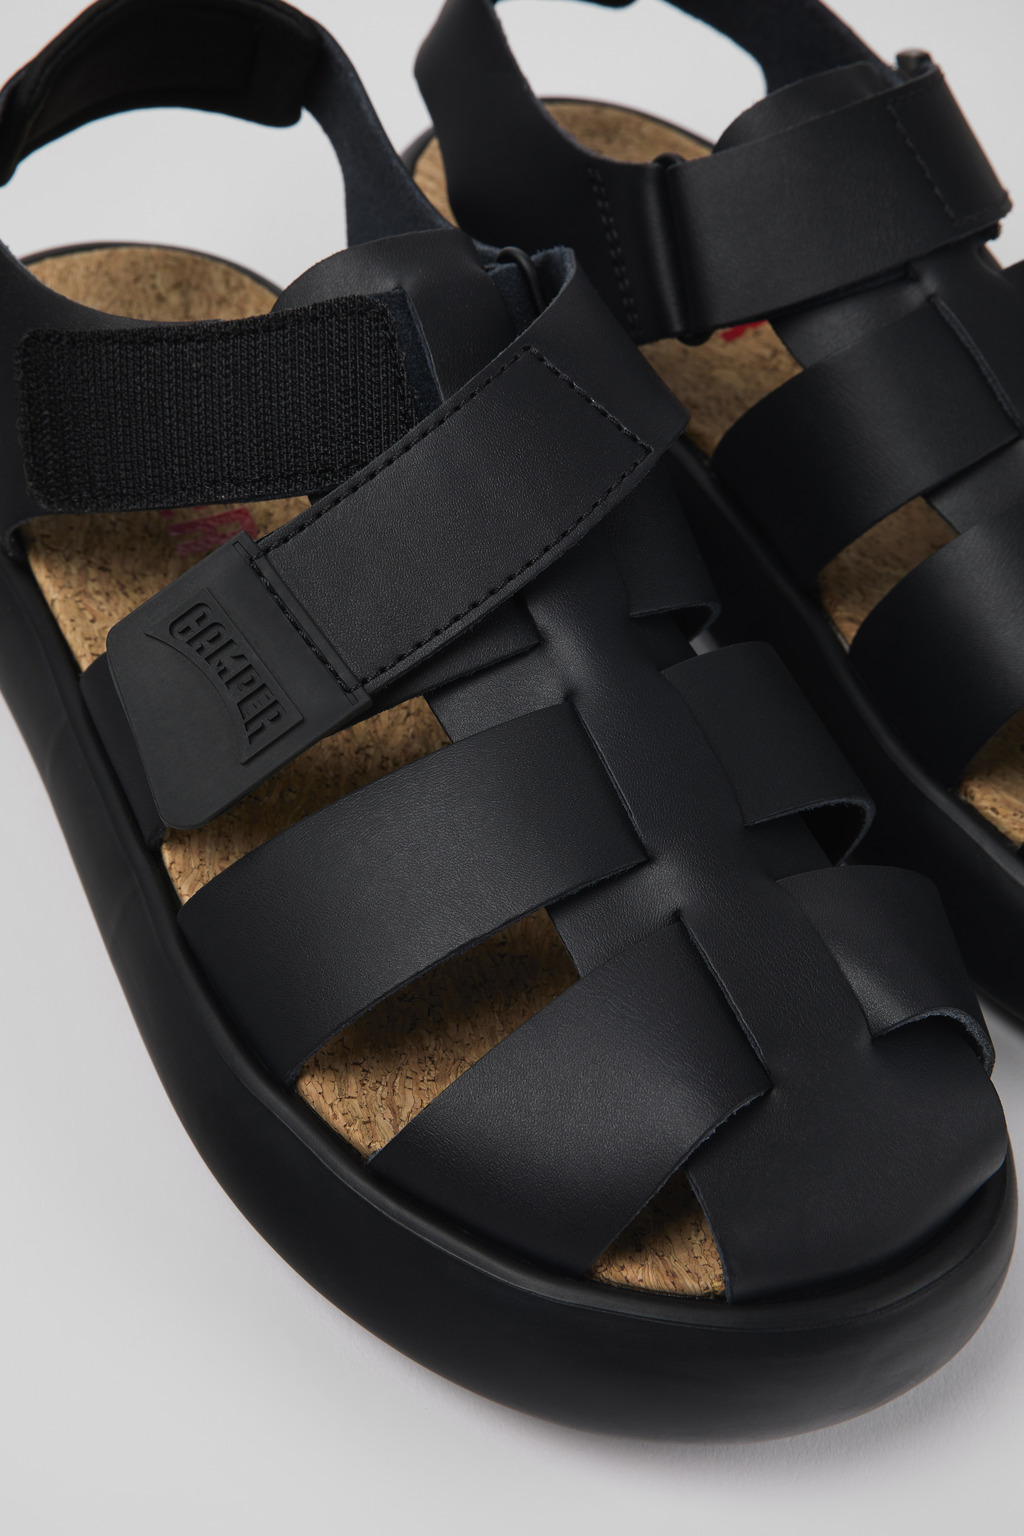 Pelotas Black Sandals for Men - Fall/Winter collection - Camper USA